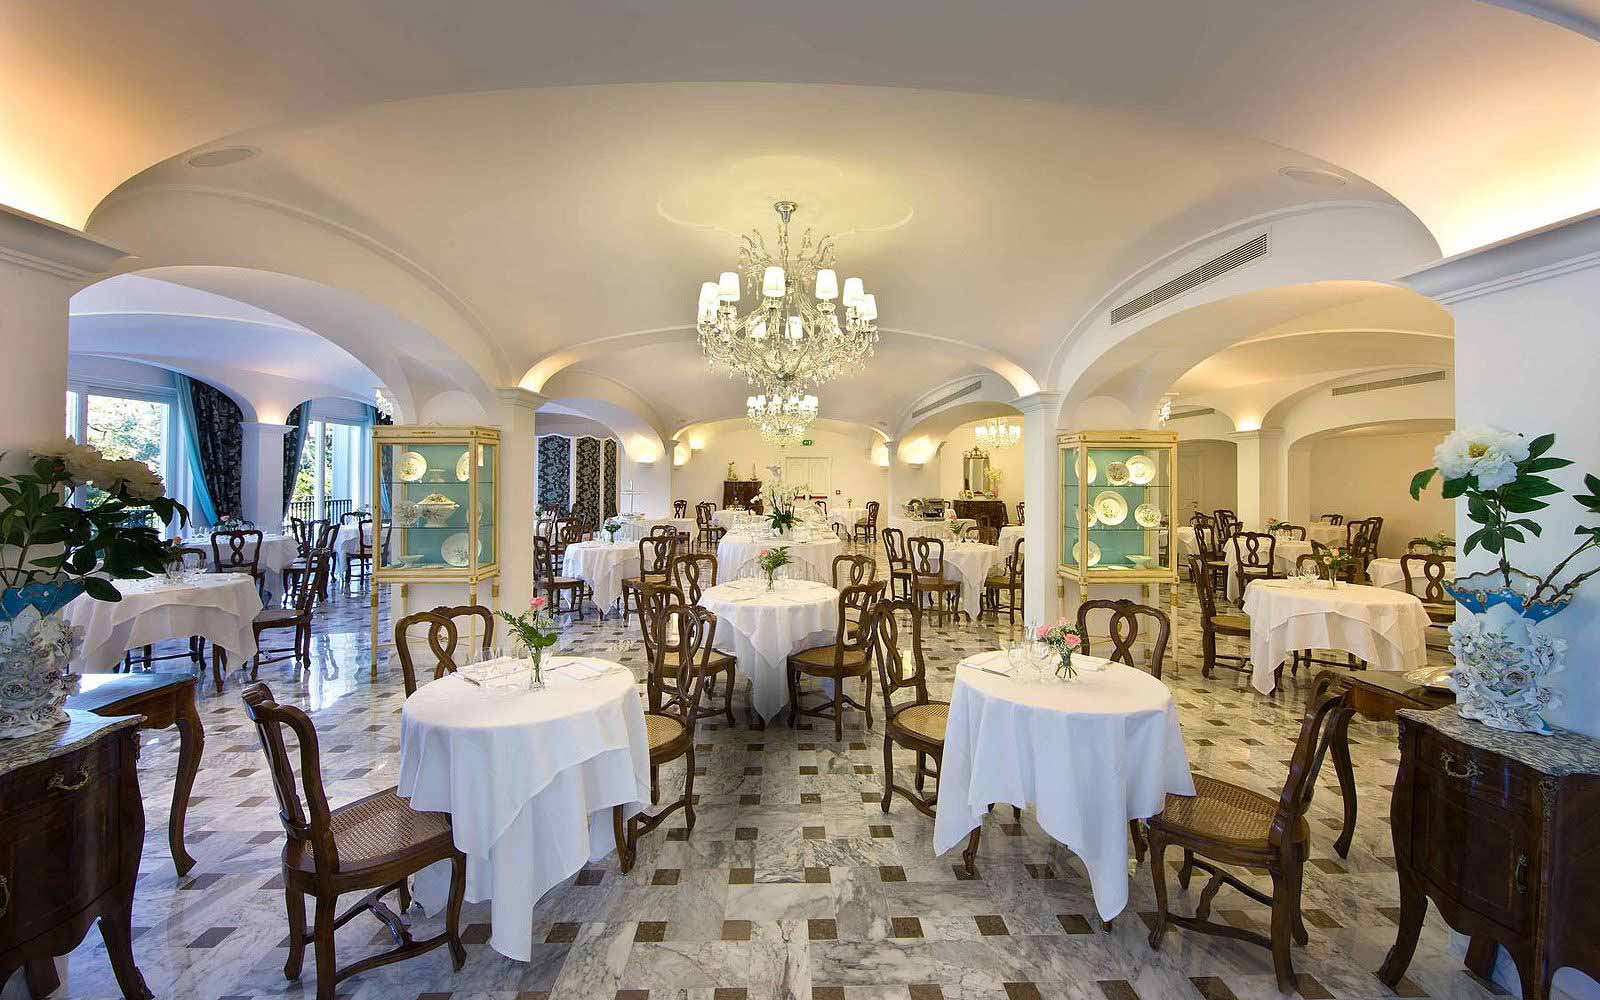 Tiffany Restaurant at the Grand Hotel La Favorita